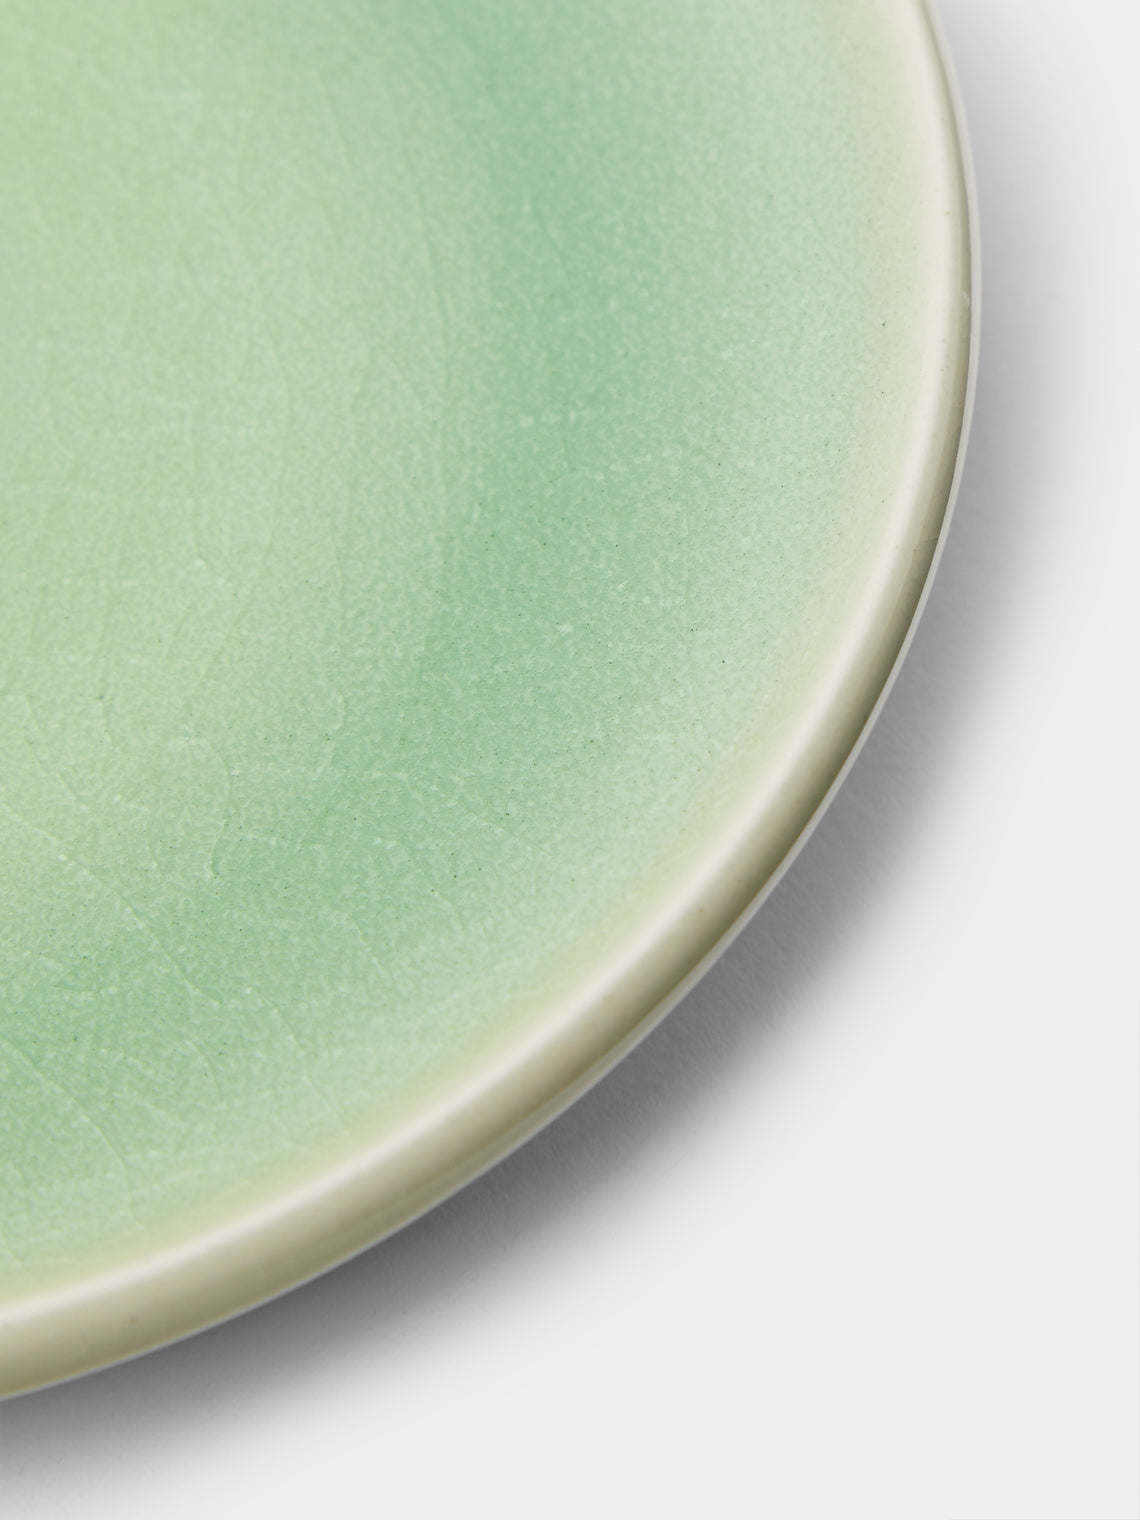 Jinho Choi - Celadon Small Plates (Set of 4) -  - ABASK